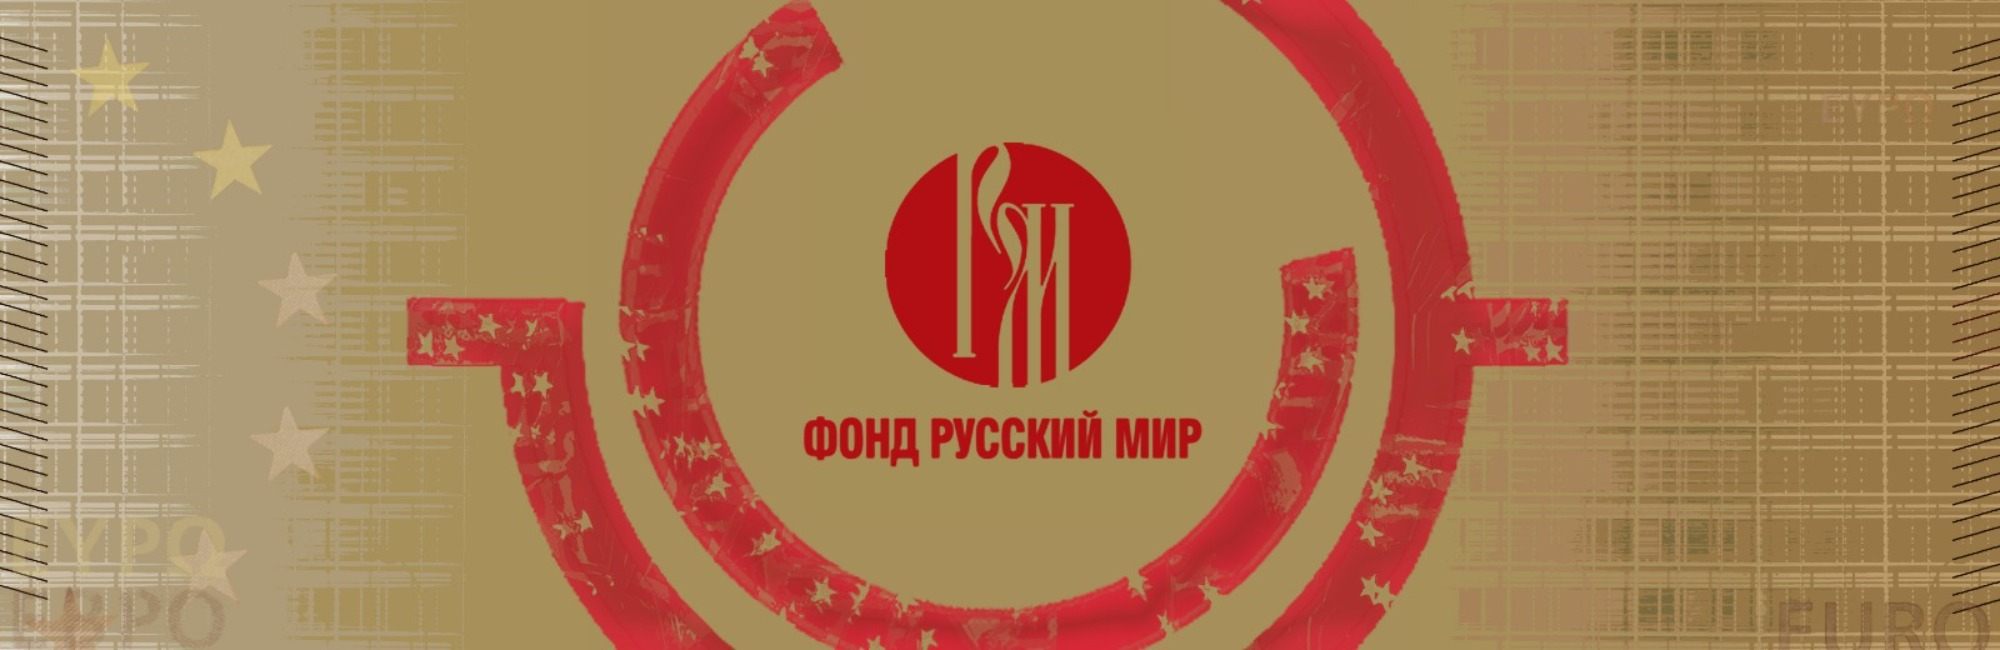 Russkiy Mir Foundation